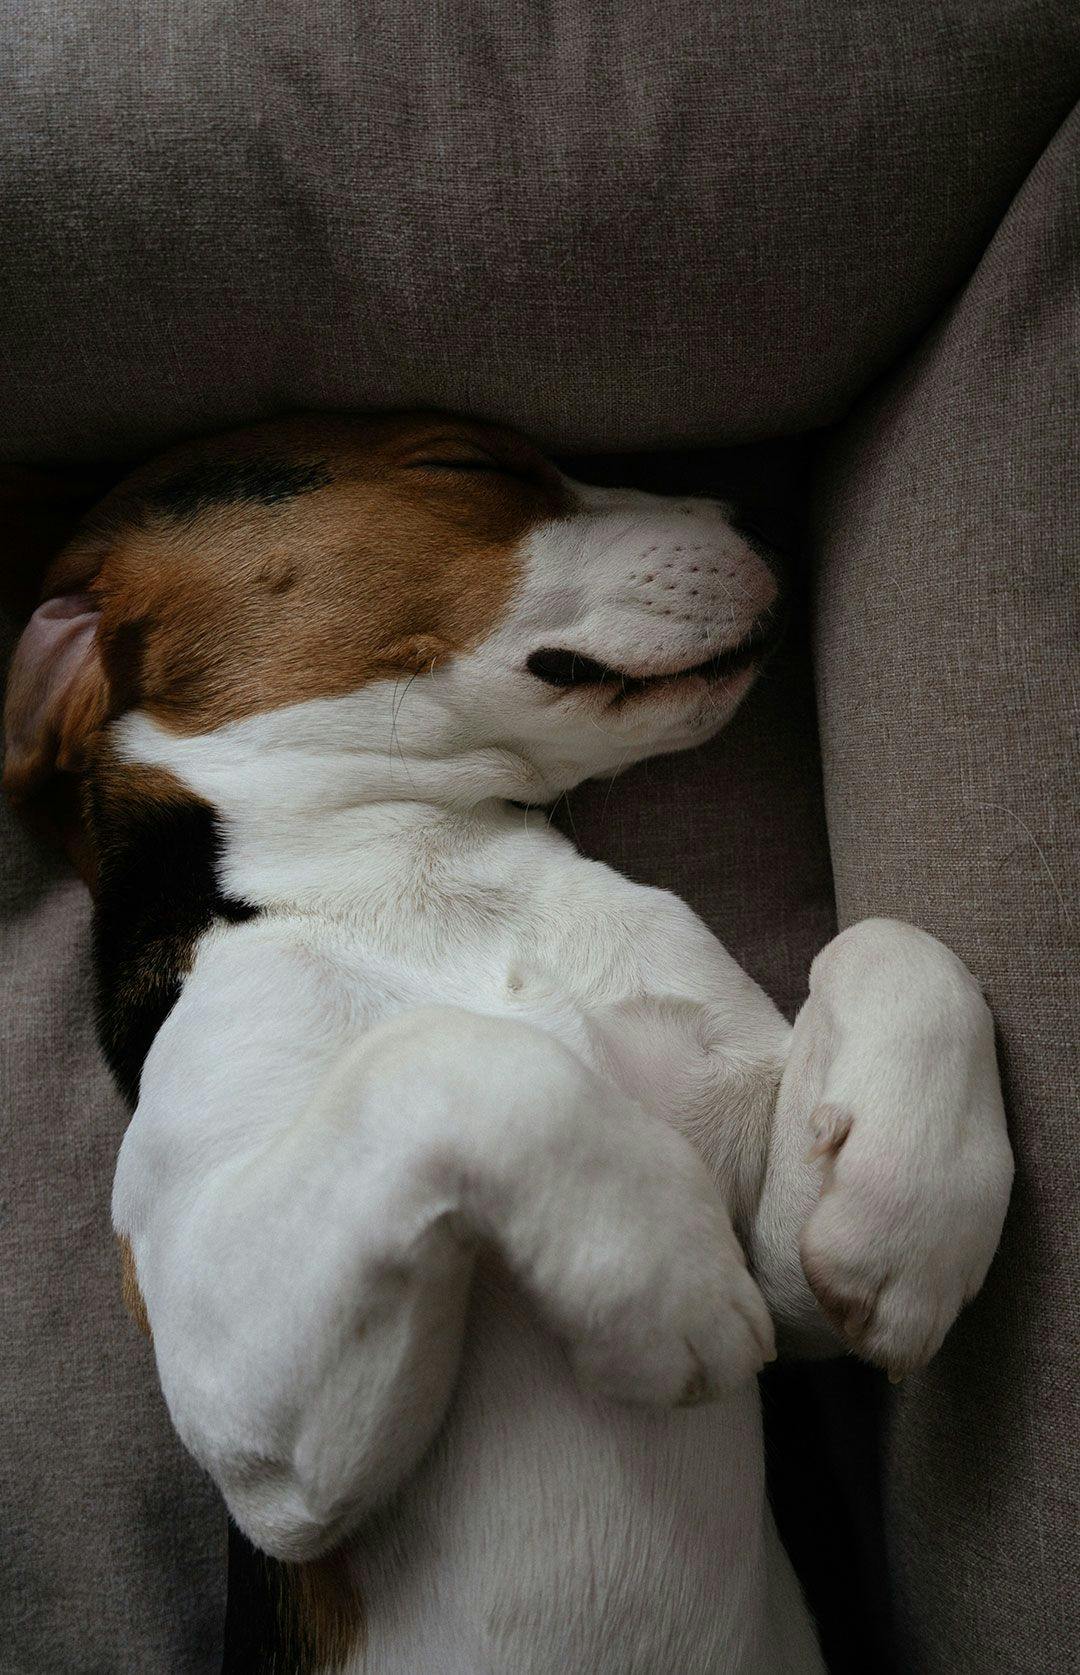 Beagle sleeping on gray bed